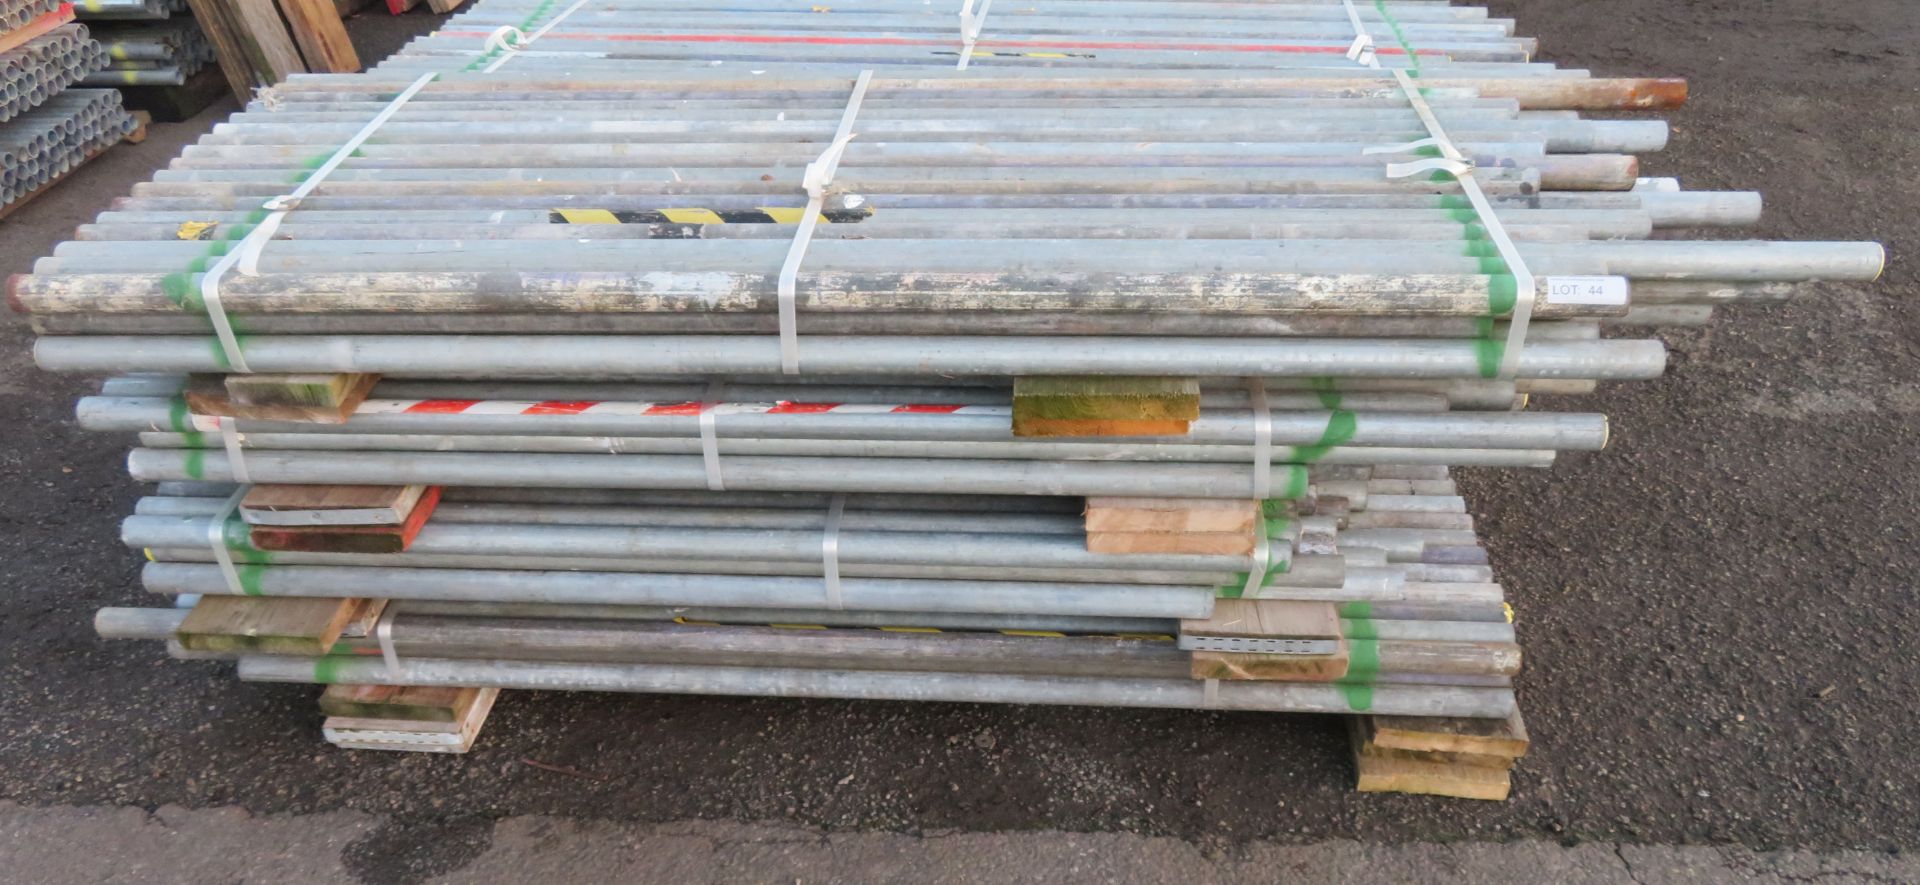 200x Various Length Galvanised Steel Scaffolding Poles. Lengths Range Between 7.5ft - 5ft.